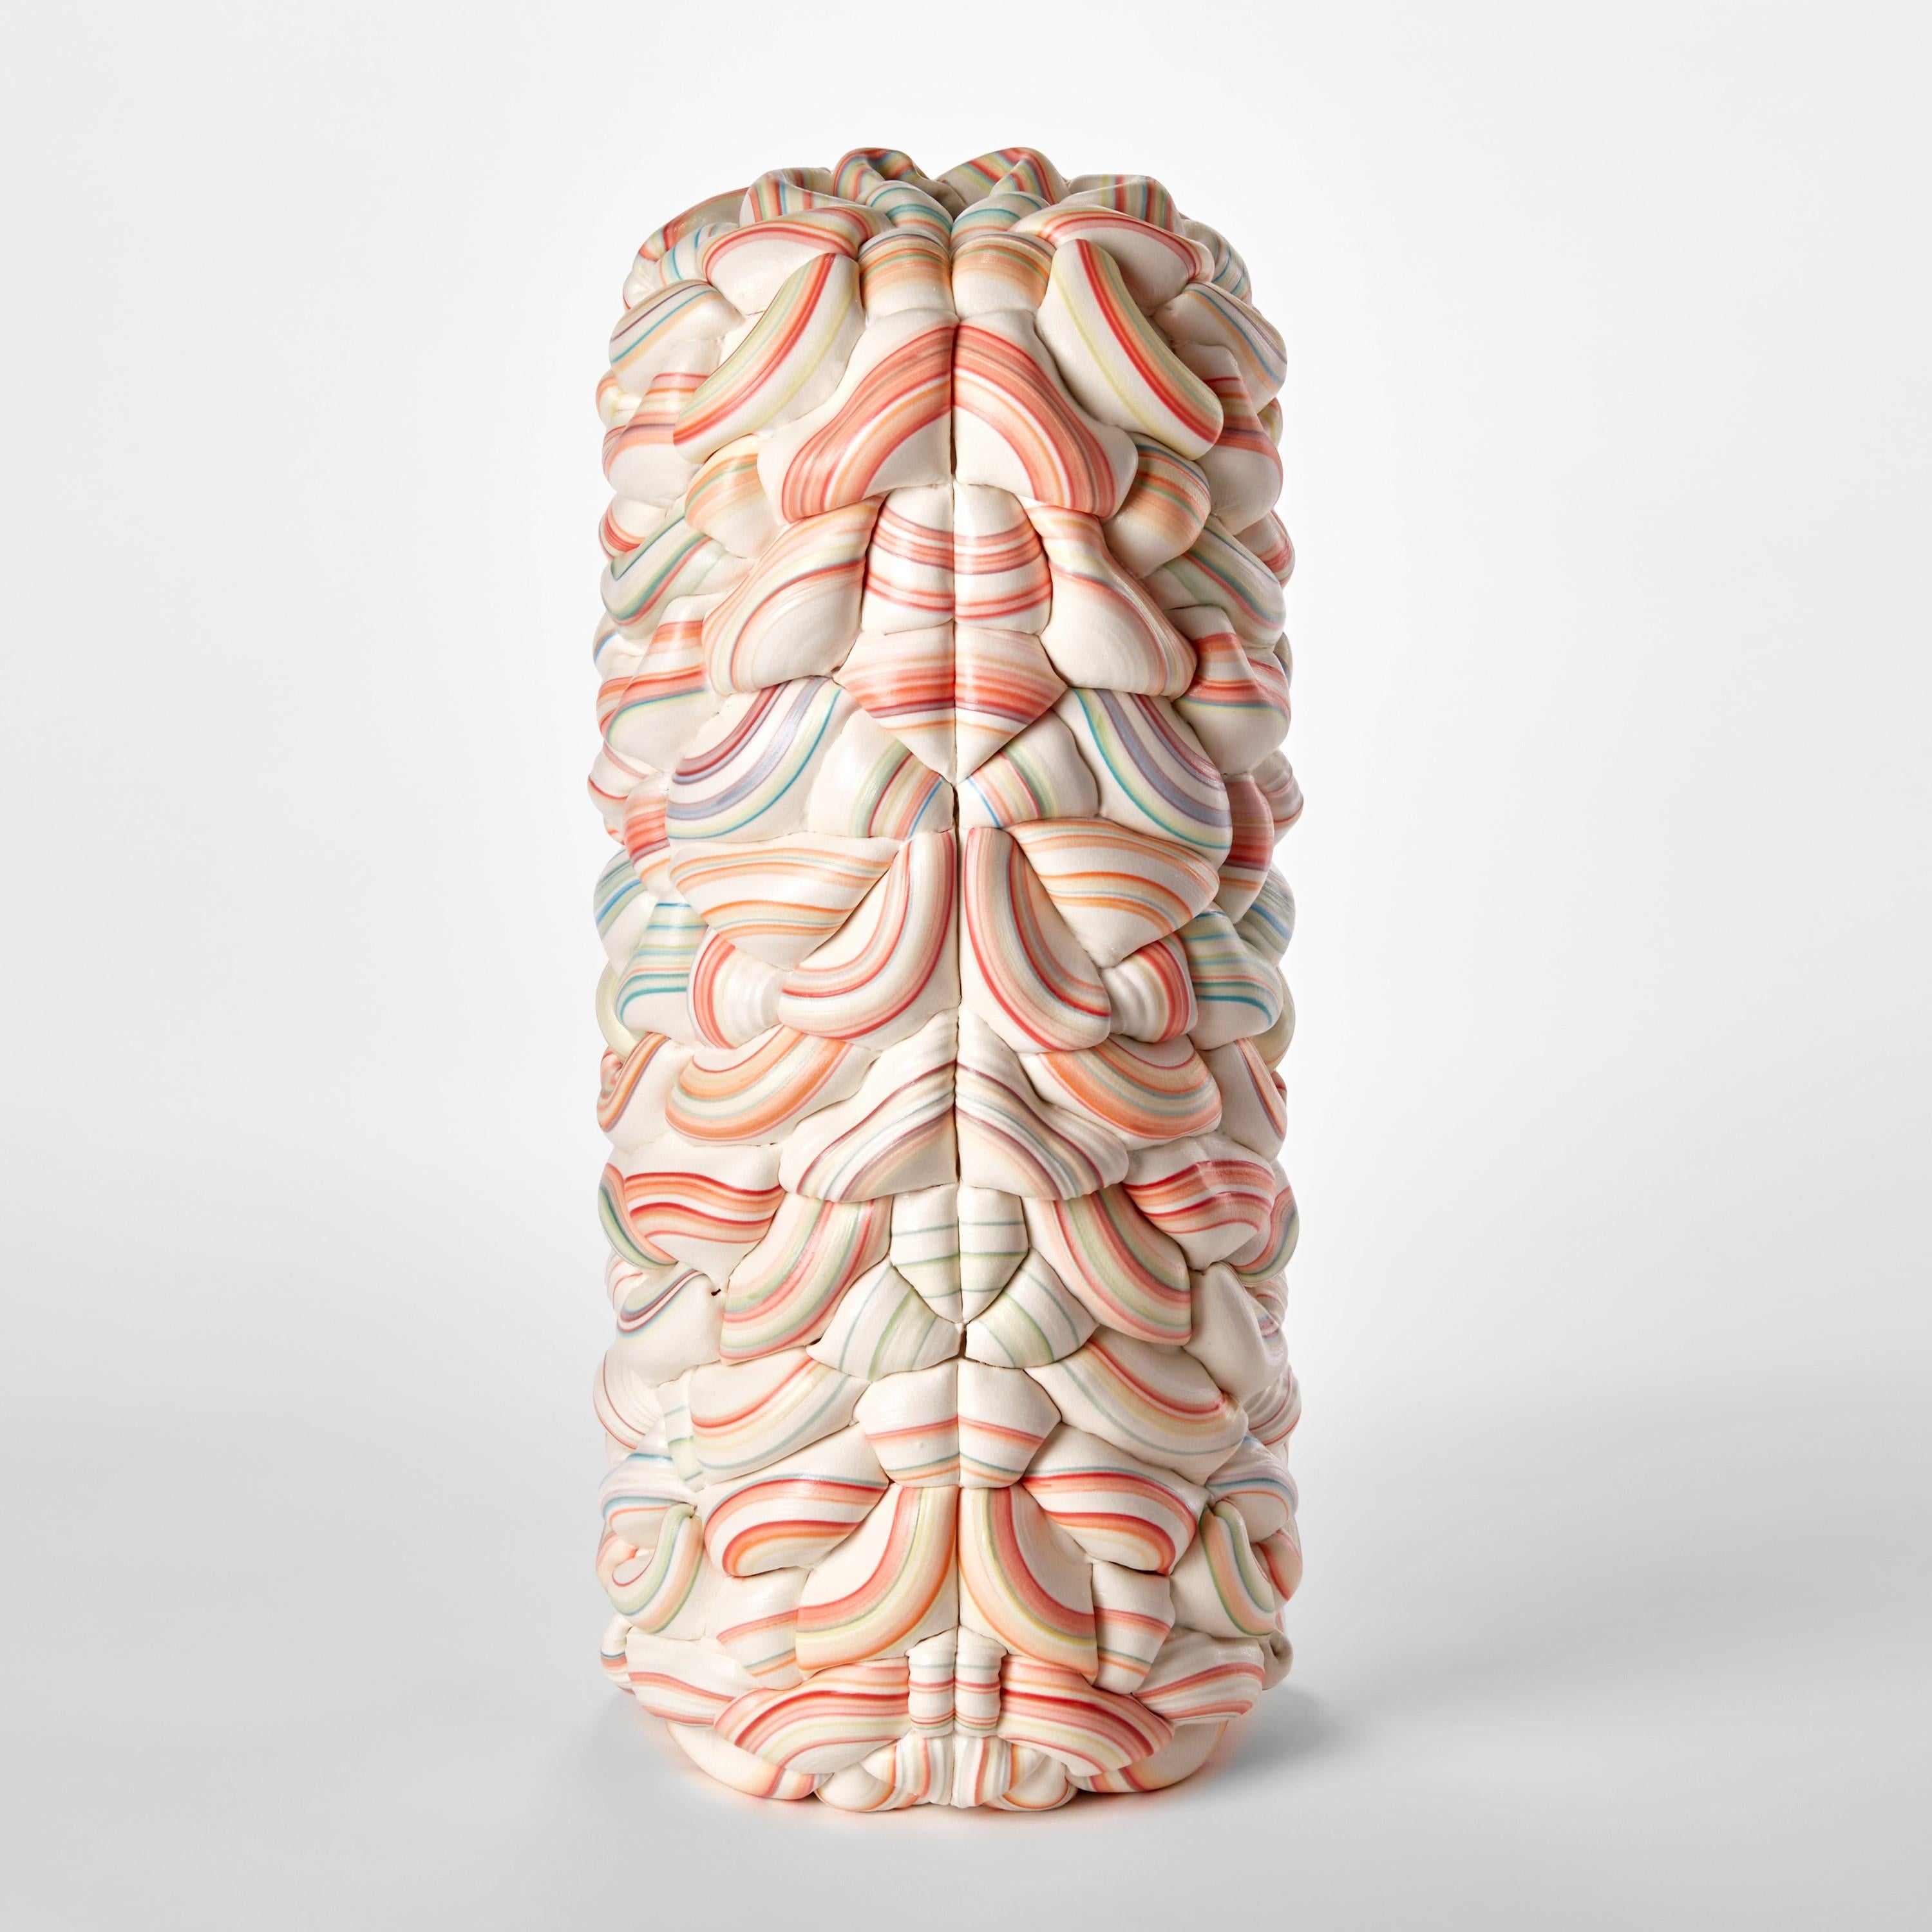 British Striped Symmetry Fold IV, woven candy cane porcelain vessel by Steven Edwards For Sale